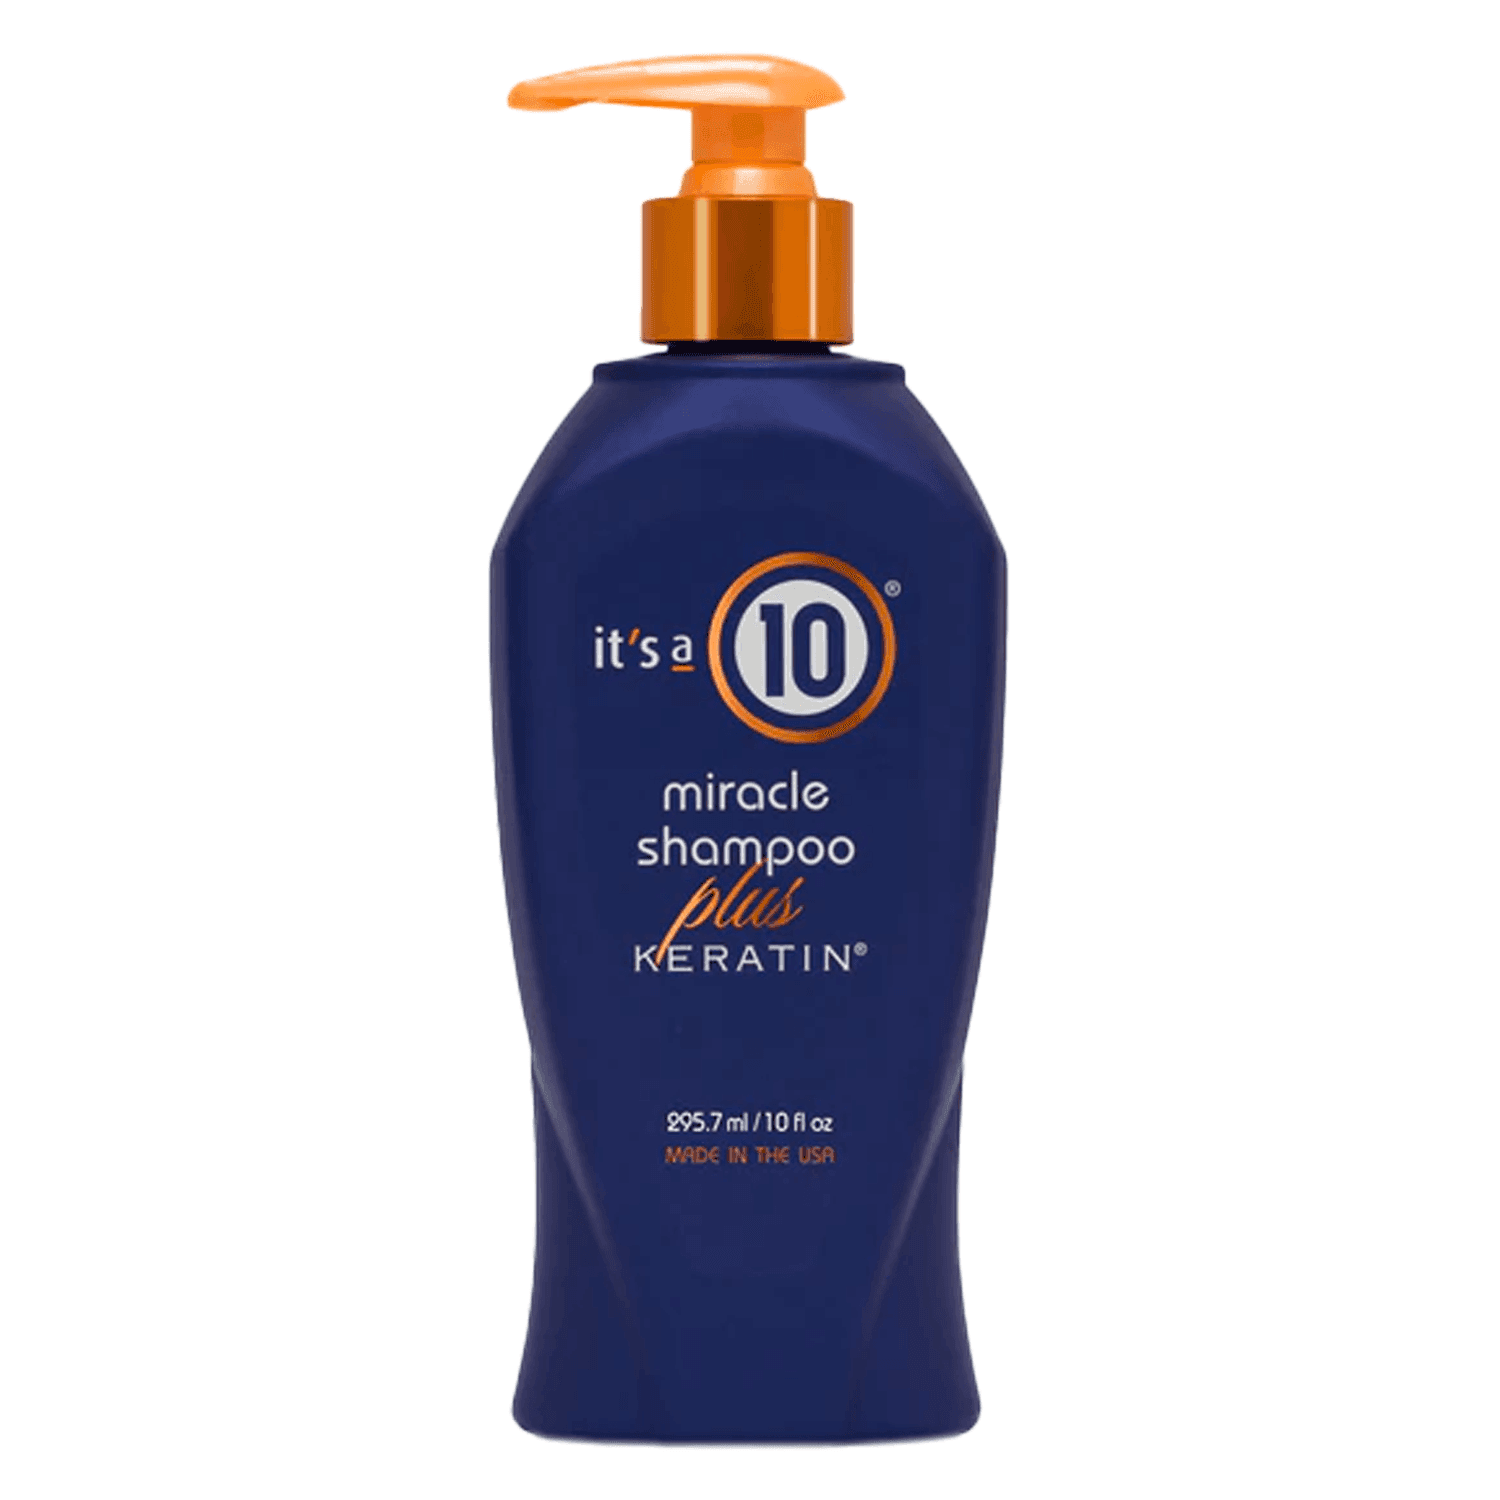 it's a 10 haircare - Miracle Shampoo Plus Keratin